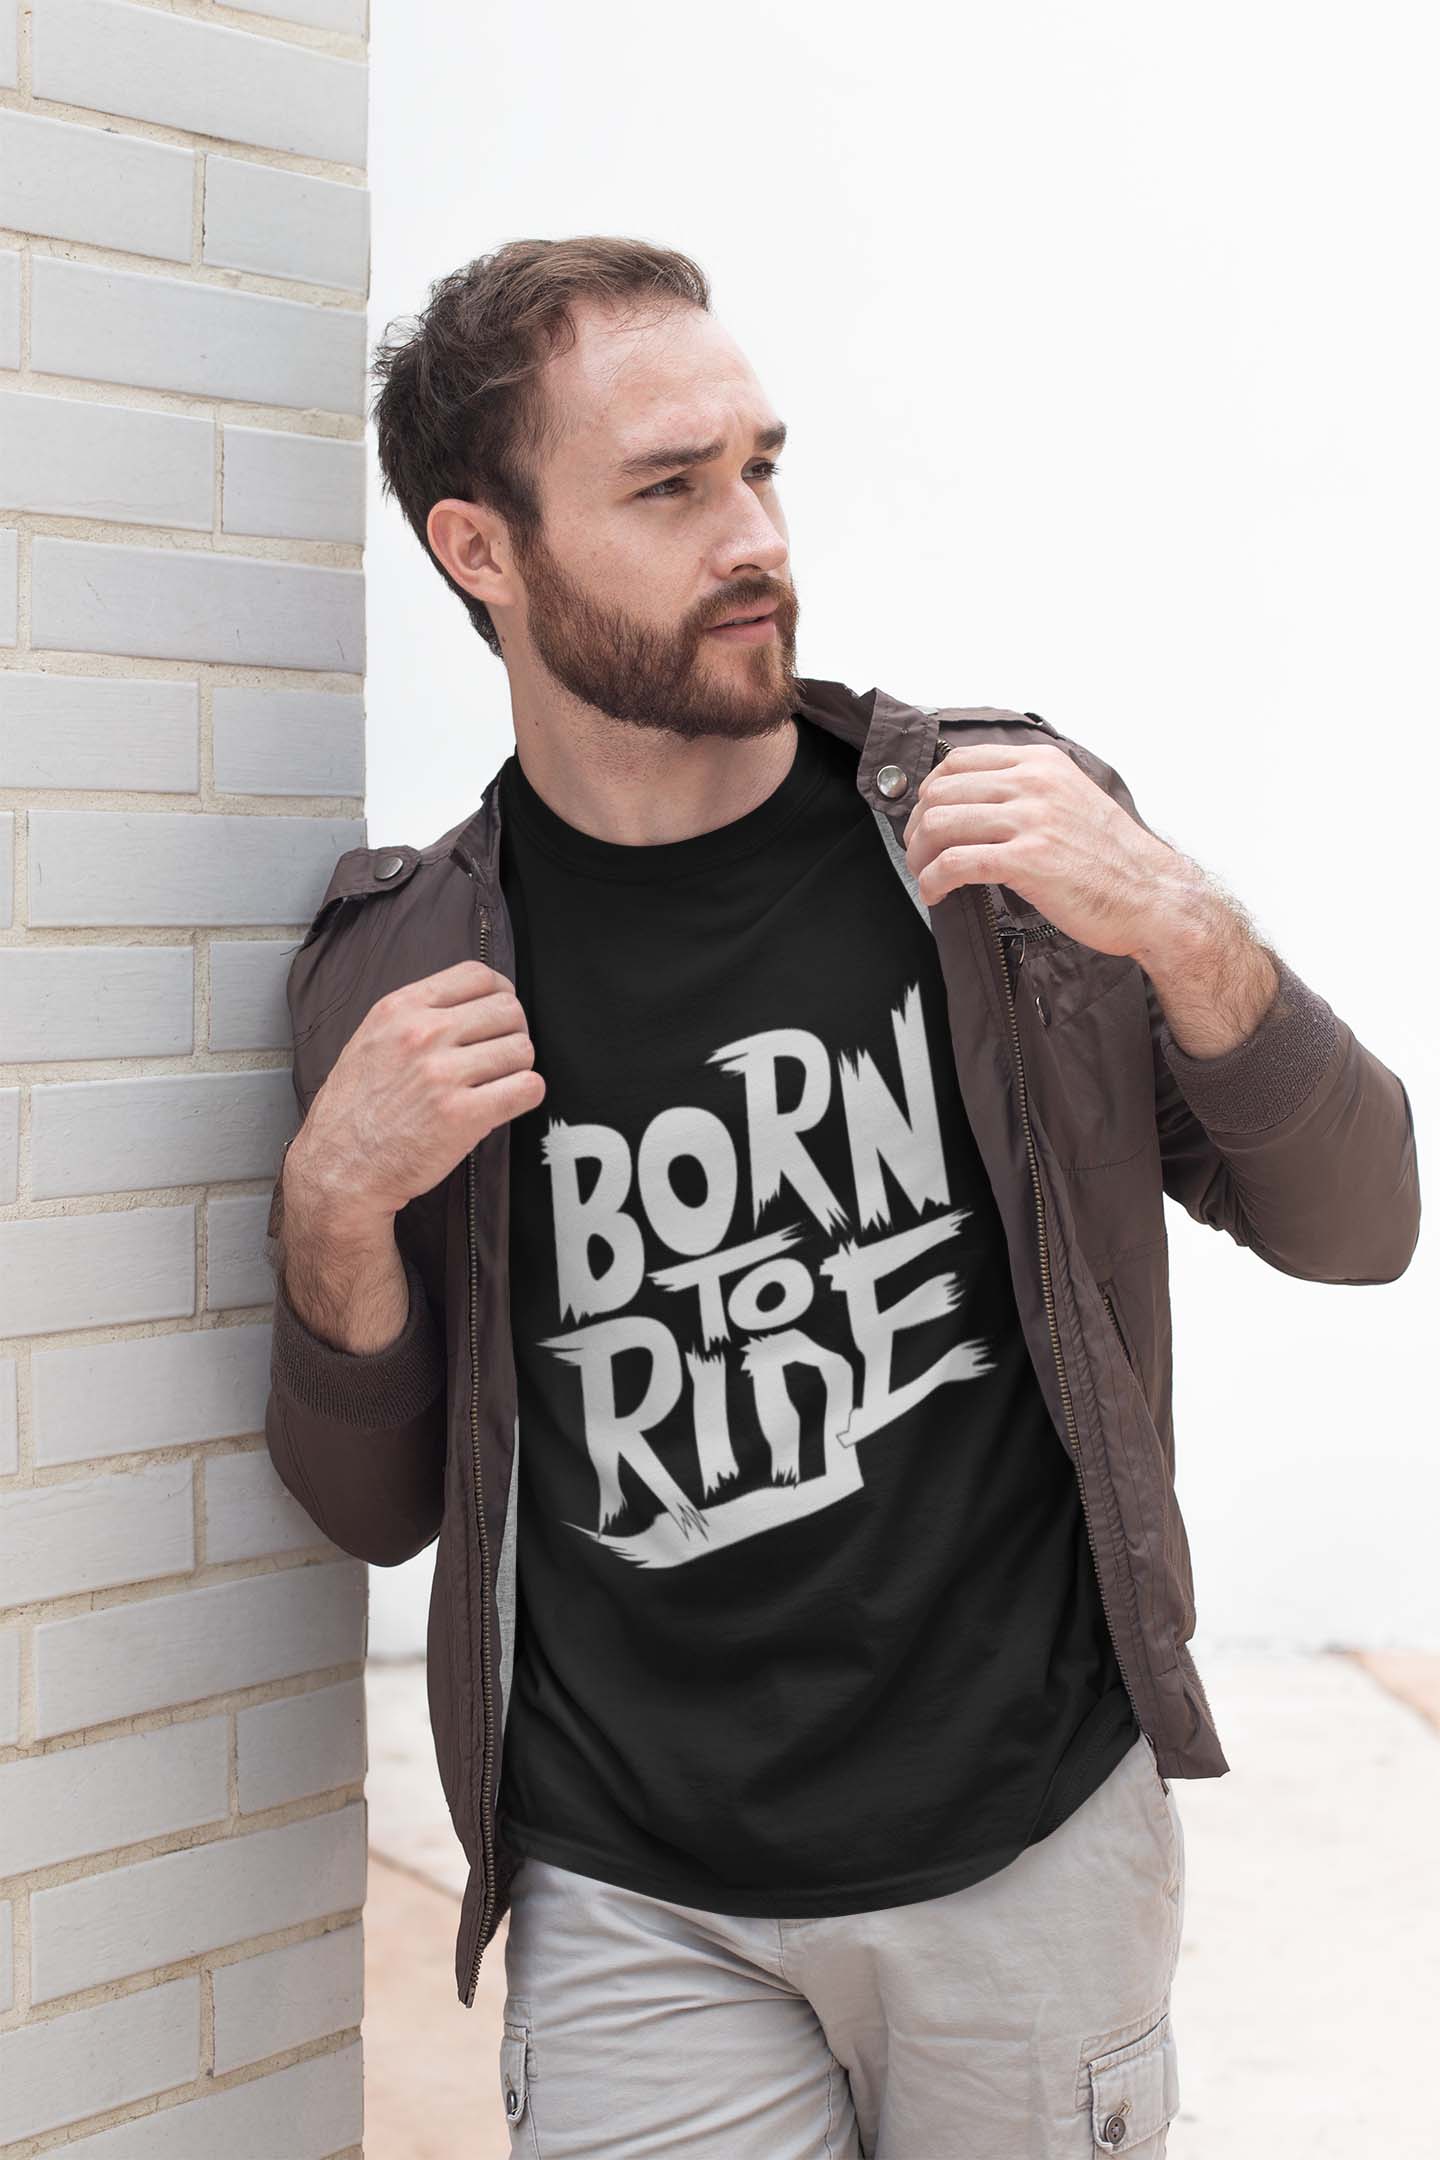 Born to ride biker t shirt Black